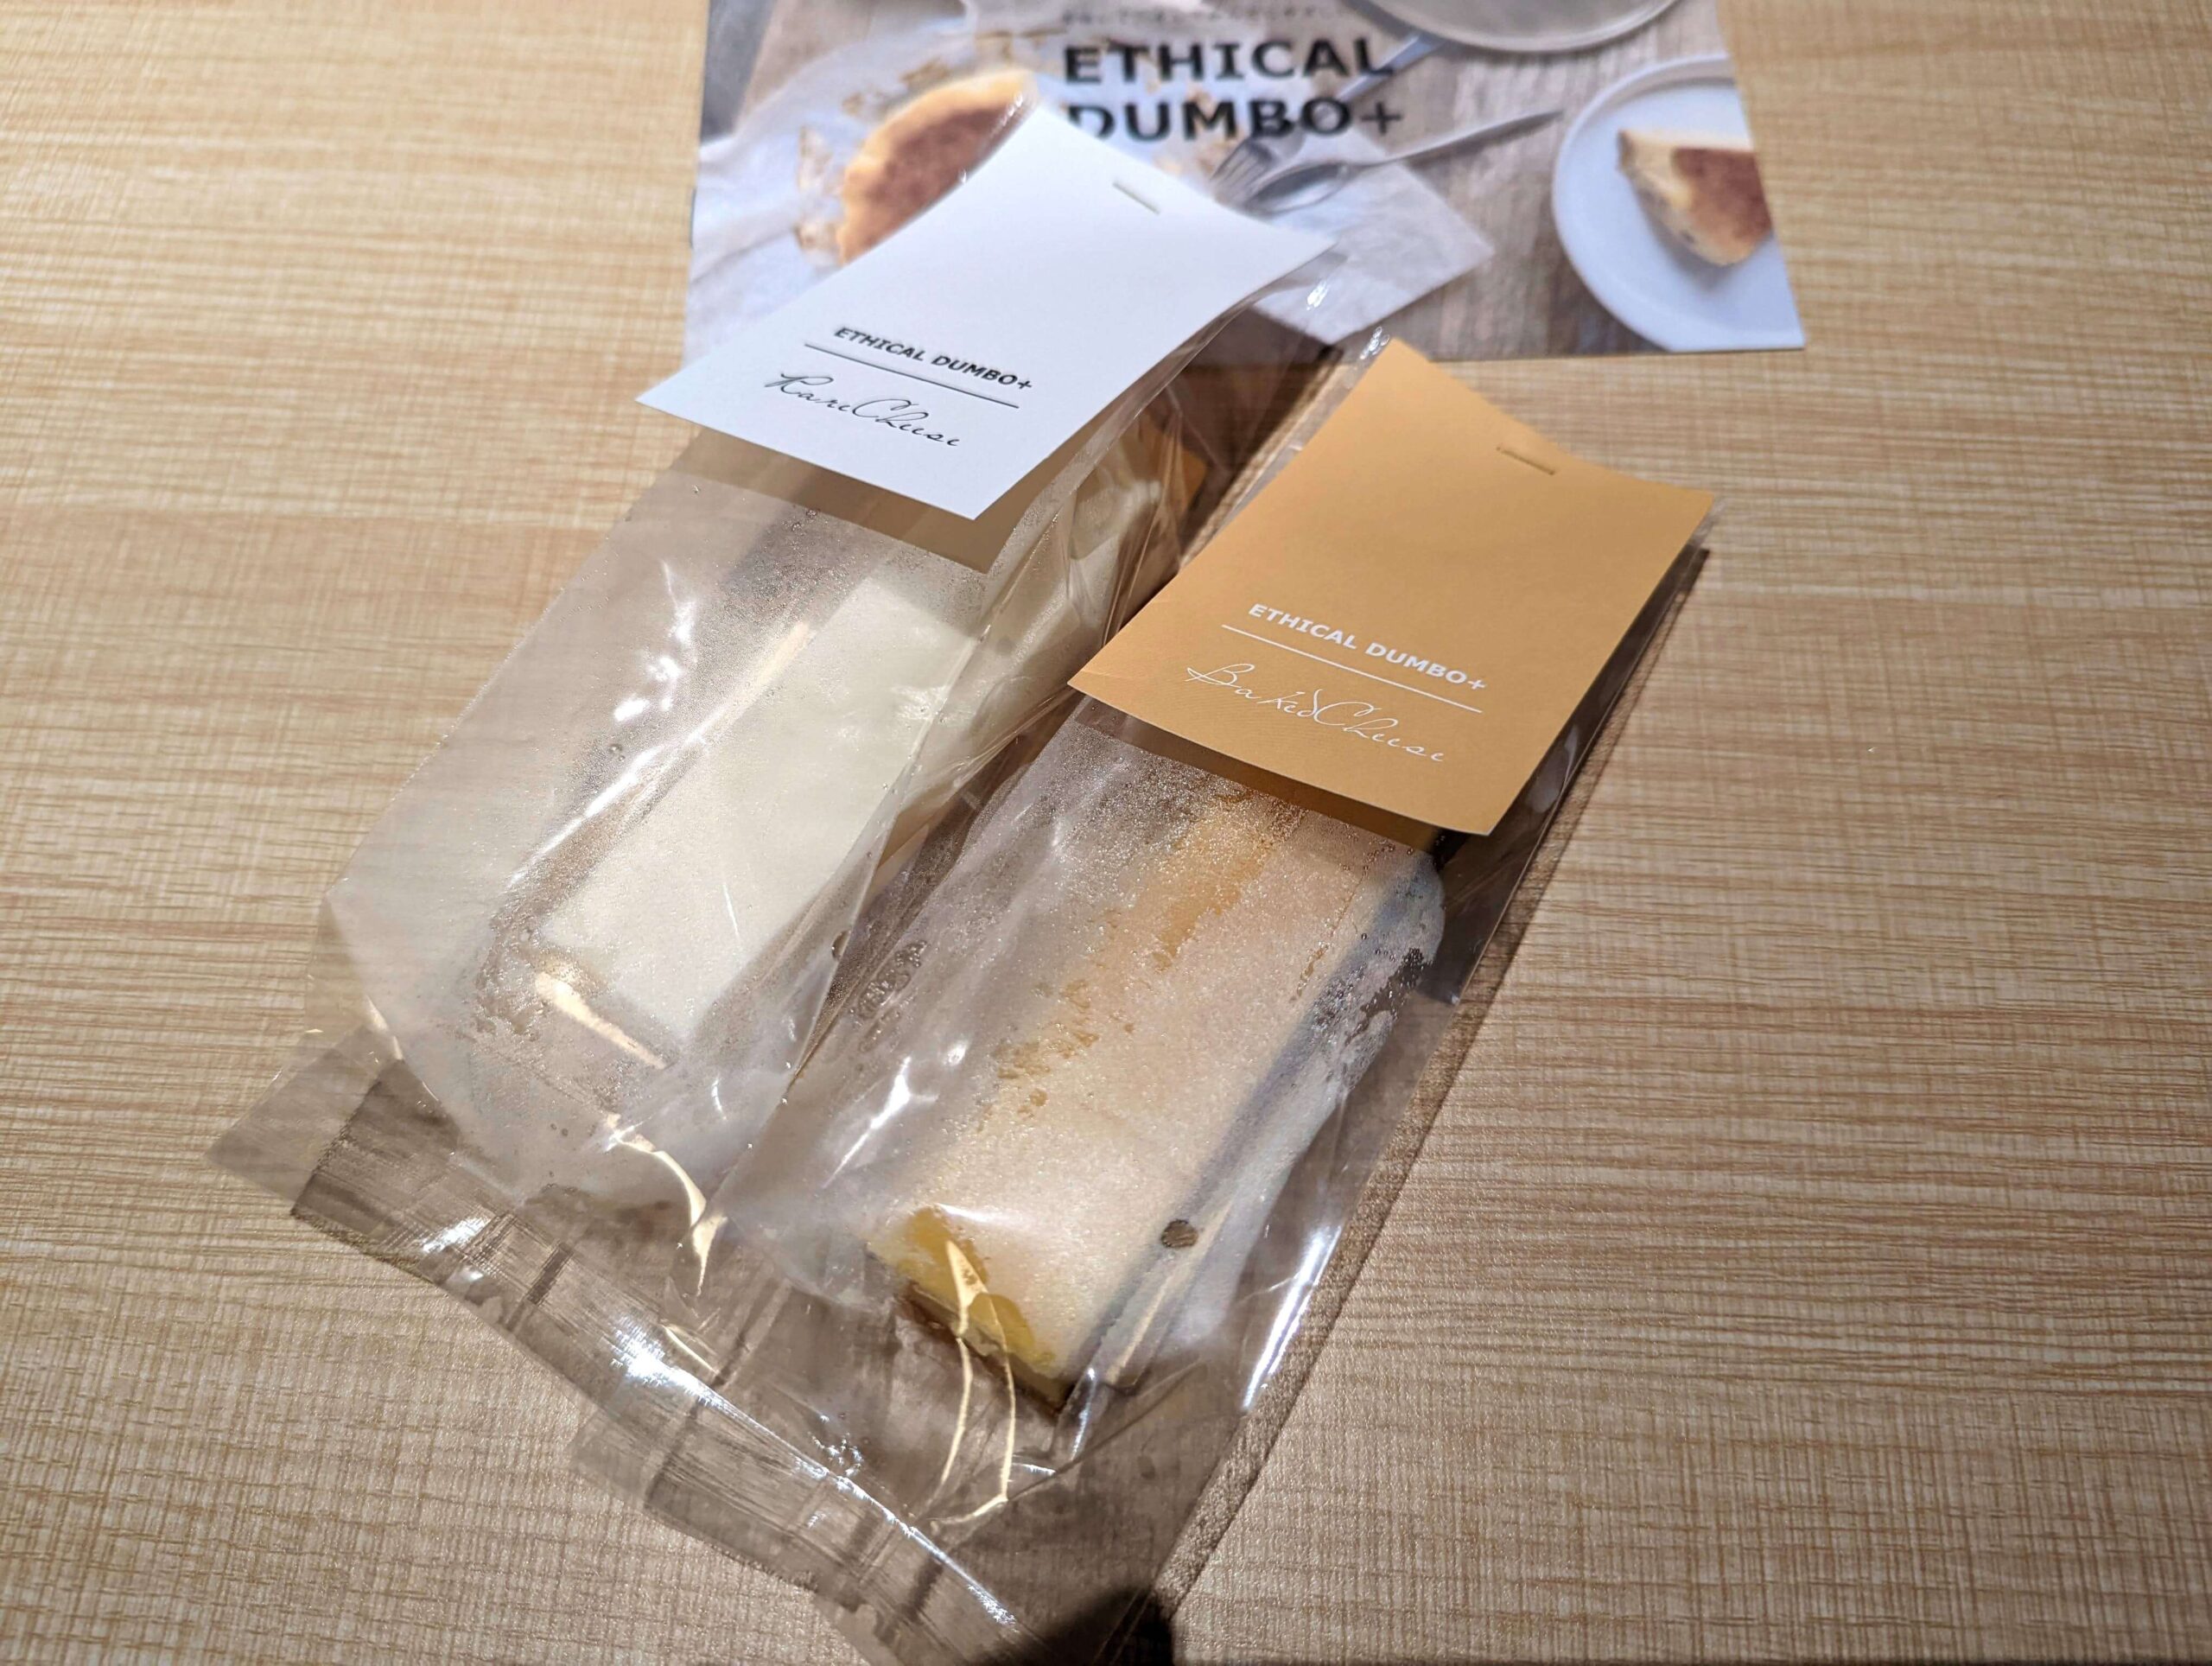 ETHICAL DUMBO+(エシカルダンボ)のチーズケーキ (4)